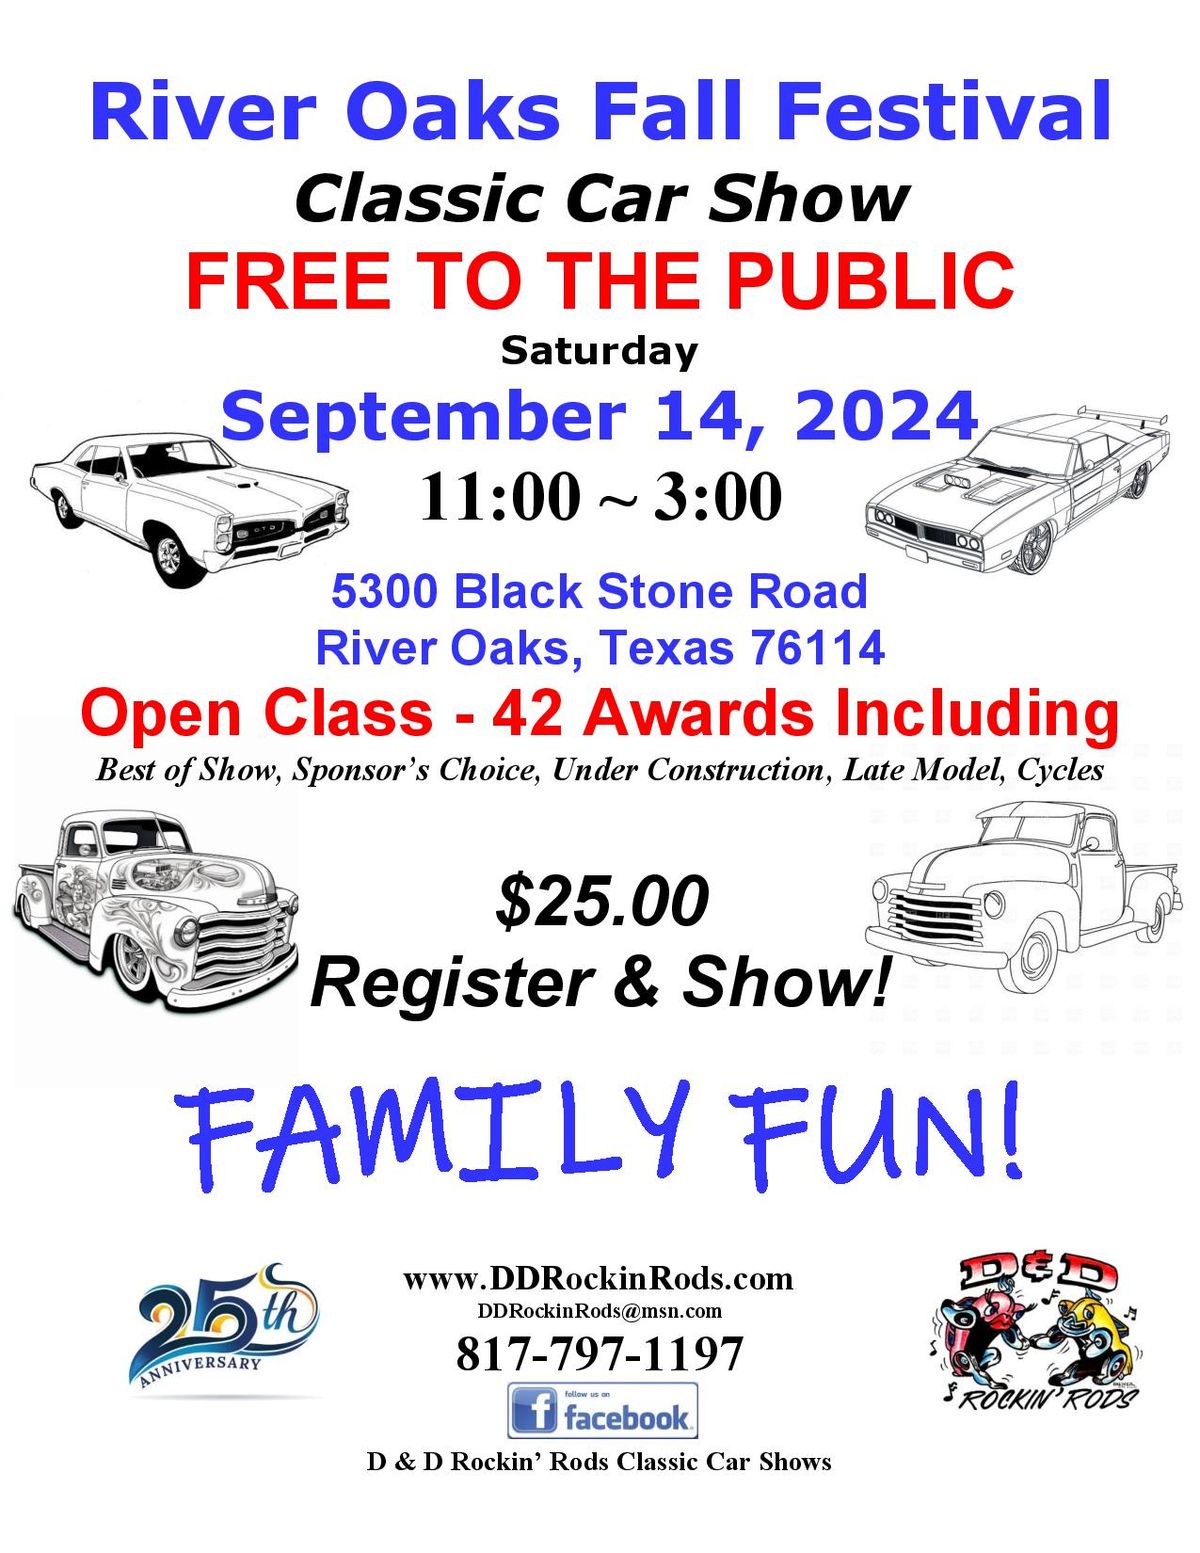 River Oaks Annual Fall Classic Car Show